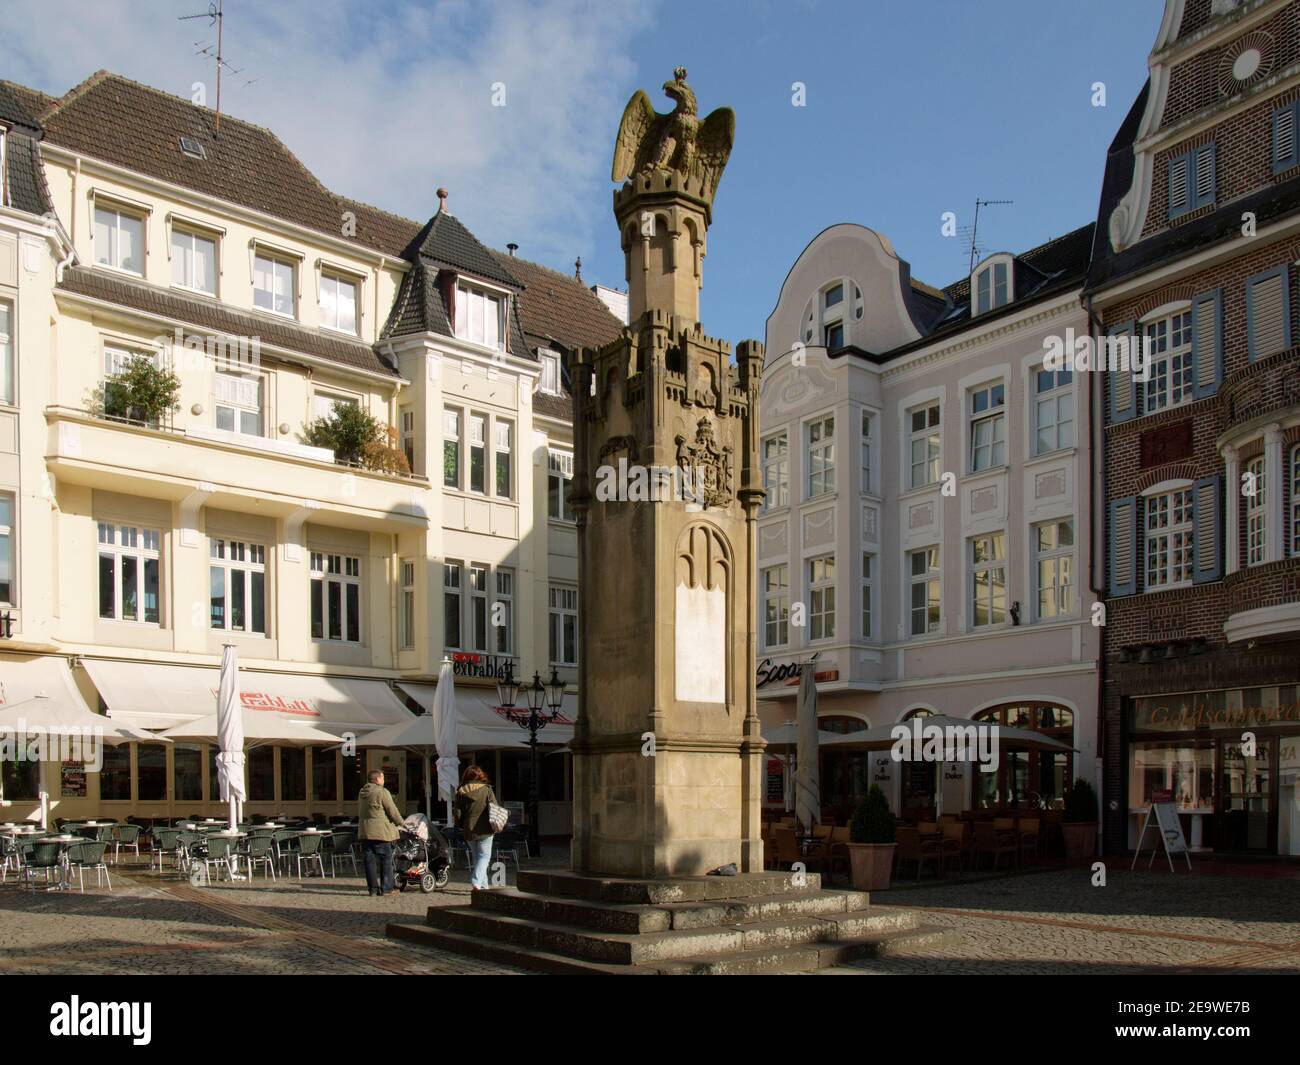 Column wih eagle on top on Altmarkt in Moers, Nordrhein-Westfalen, Germany. Stock Photo